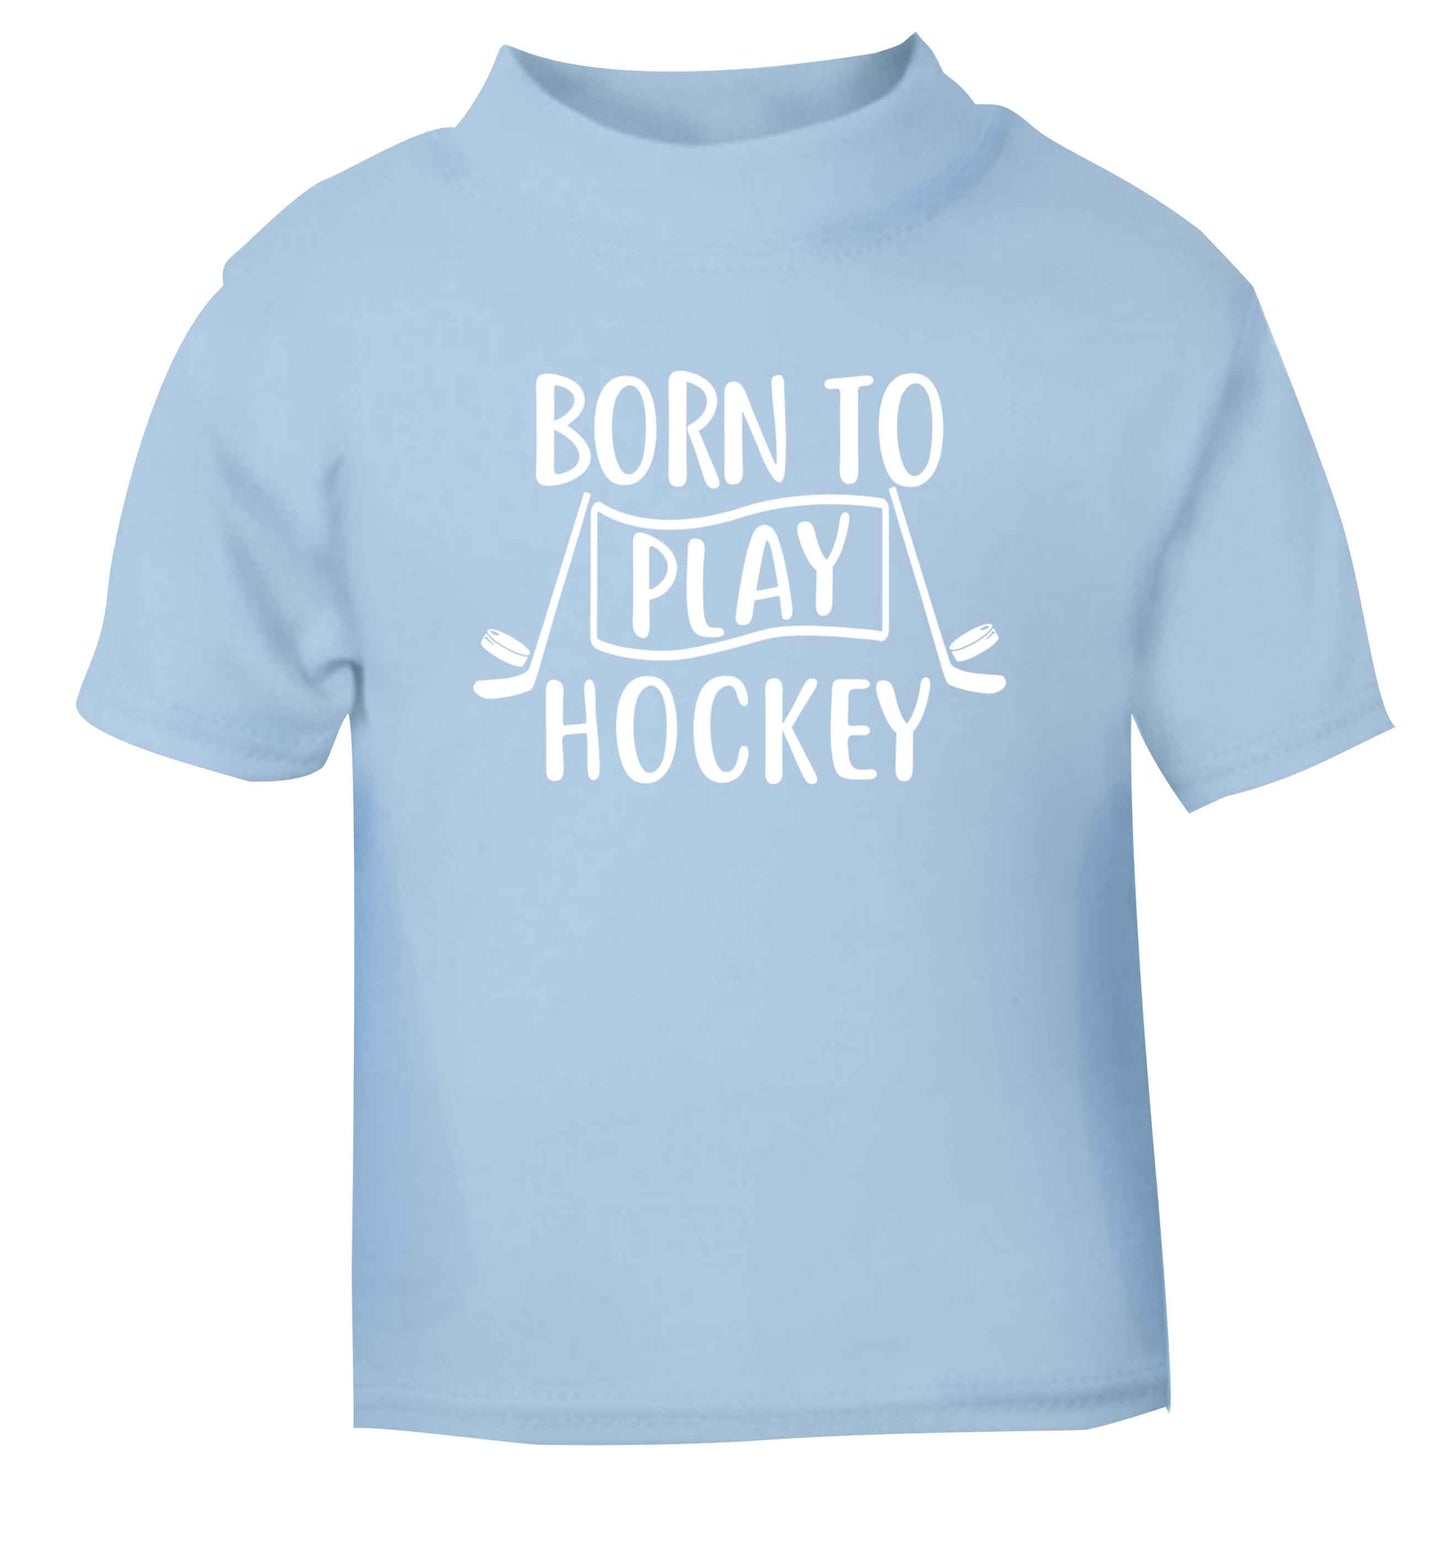 Born to play hockey light blue Baby Toddler Tshirt 2 Years